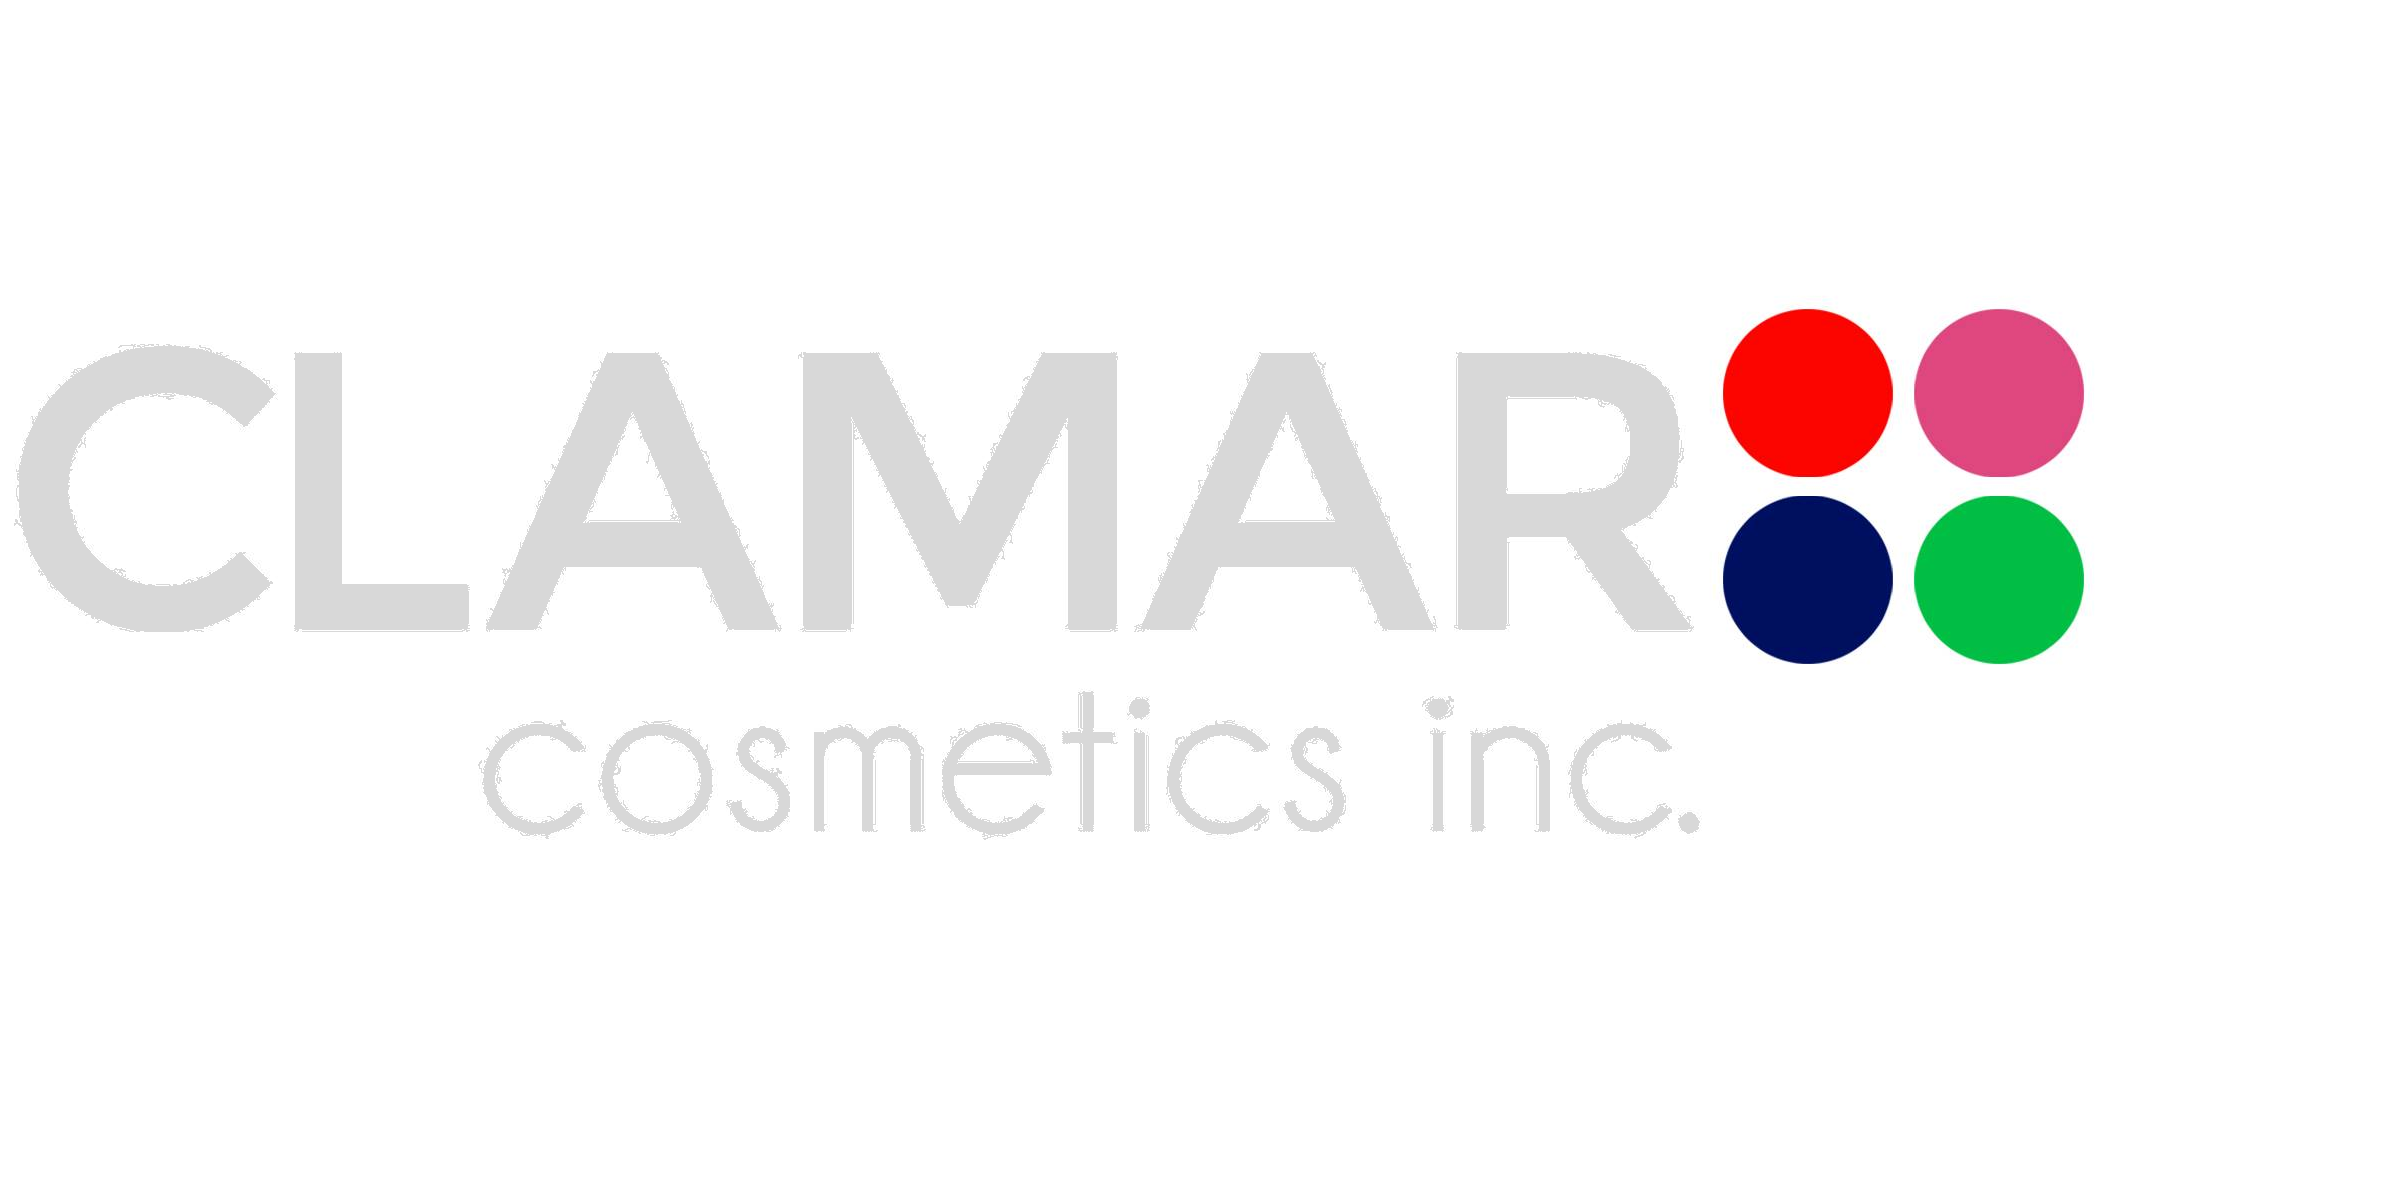 Clamar Cosmetics Inc.| Cosmetics & Skin Care Product Manufacturing